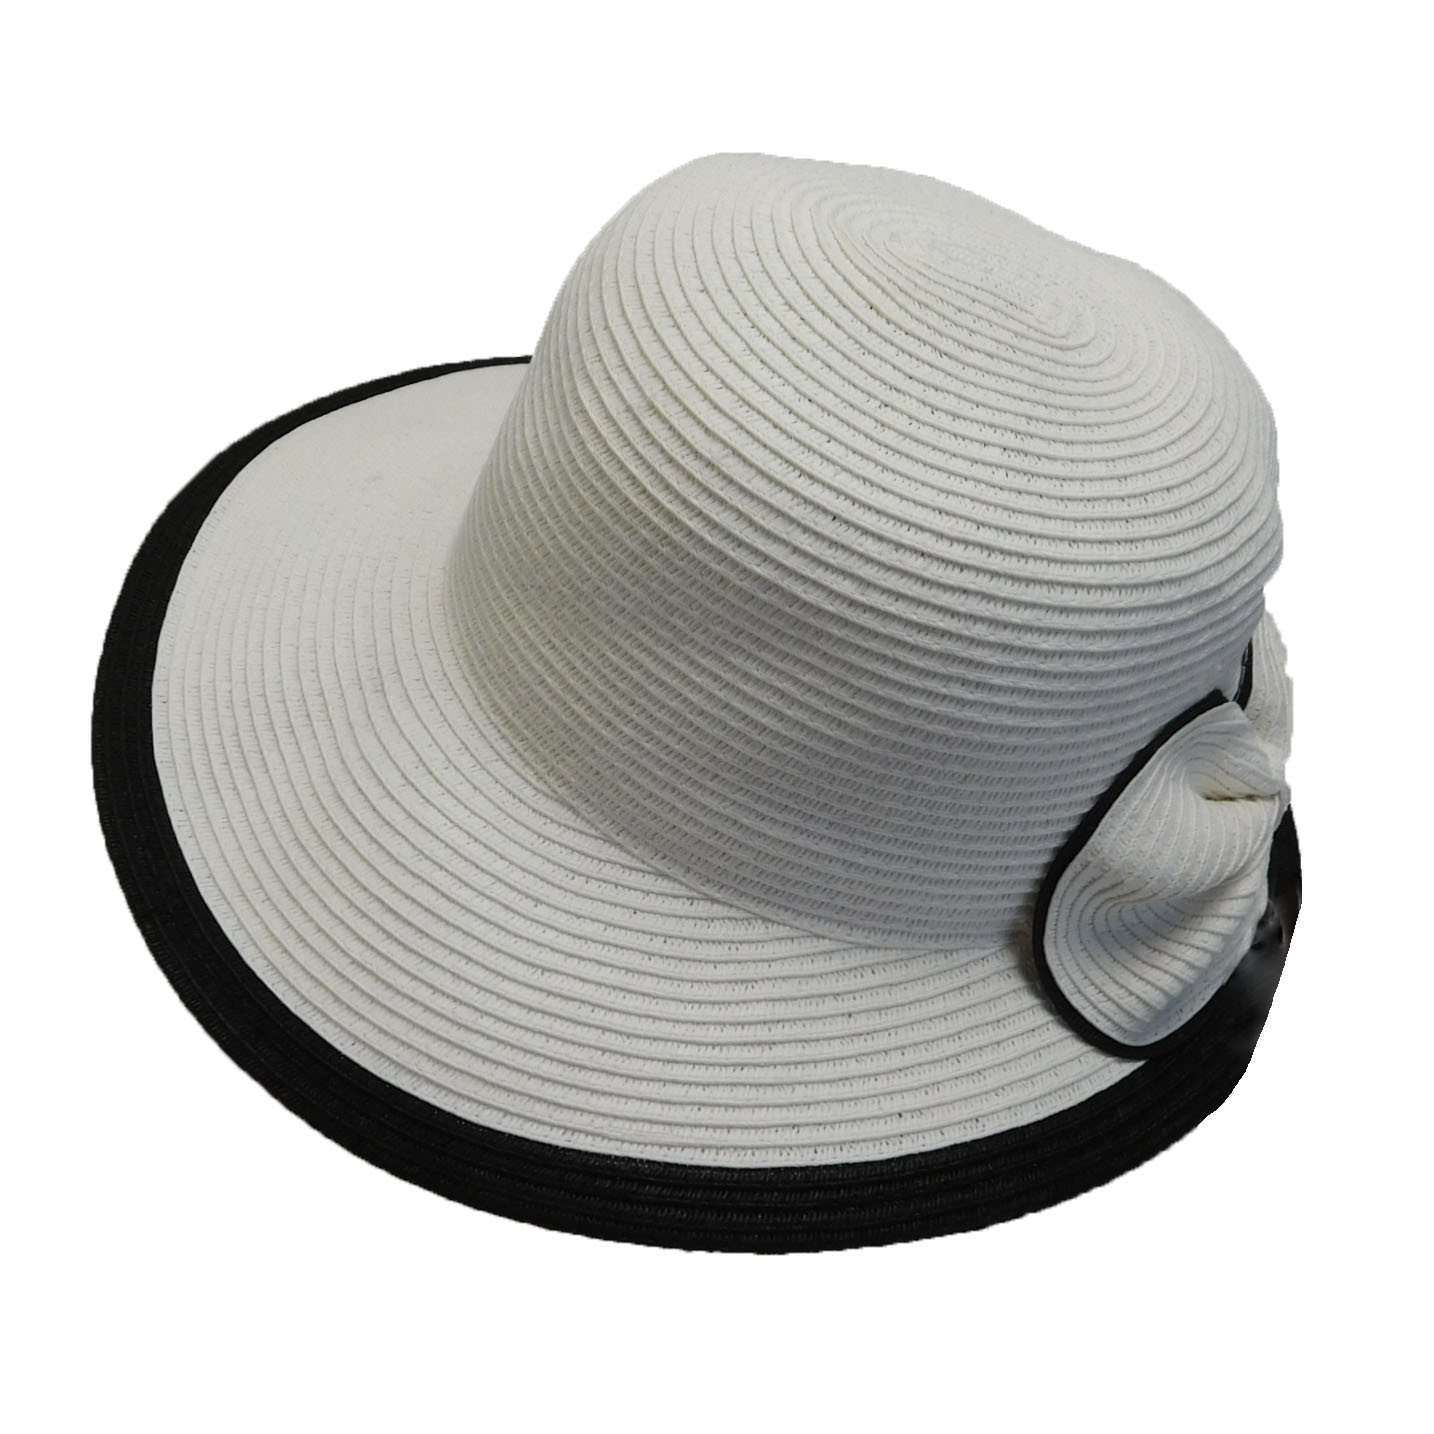 Black and White Sun Hat with Large Straw Bow - DNMC Hats Wide Brim Hat Boardwalk Style Hats da761WH White Medium (57 cm) 